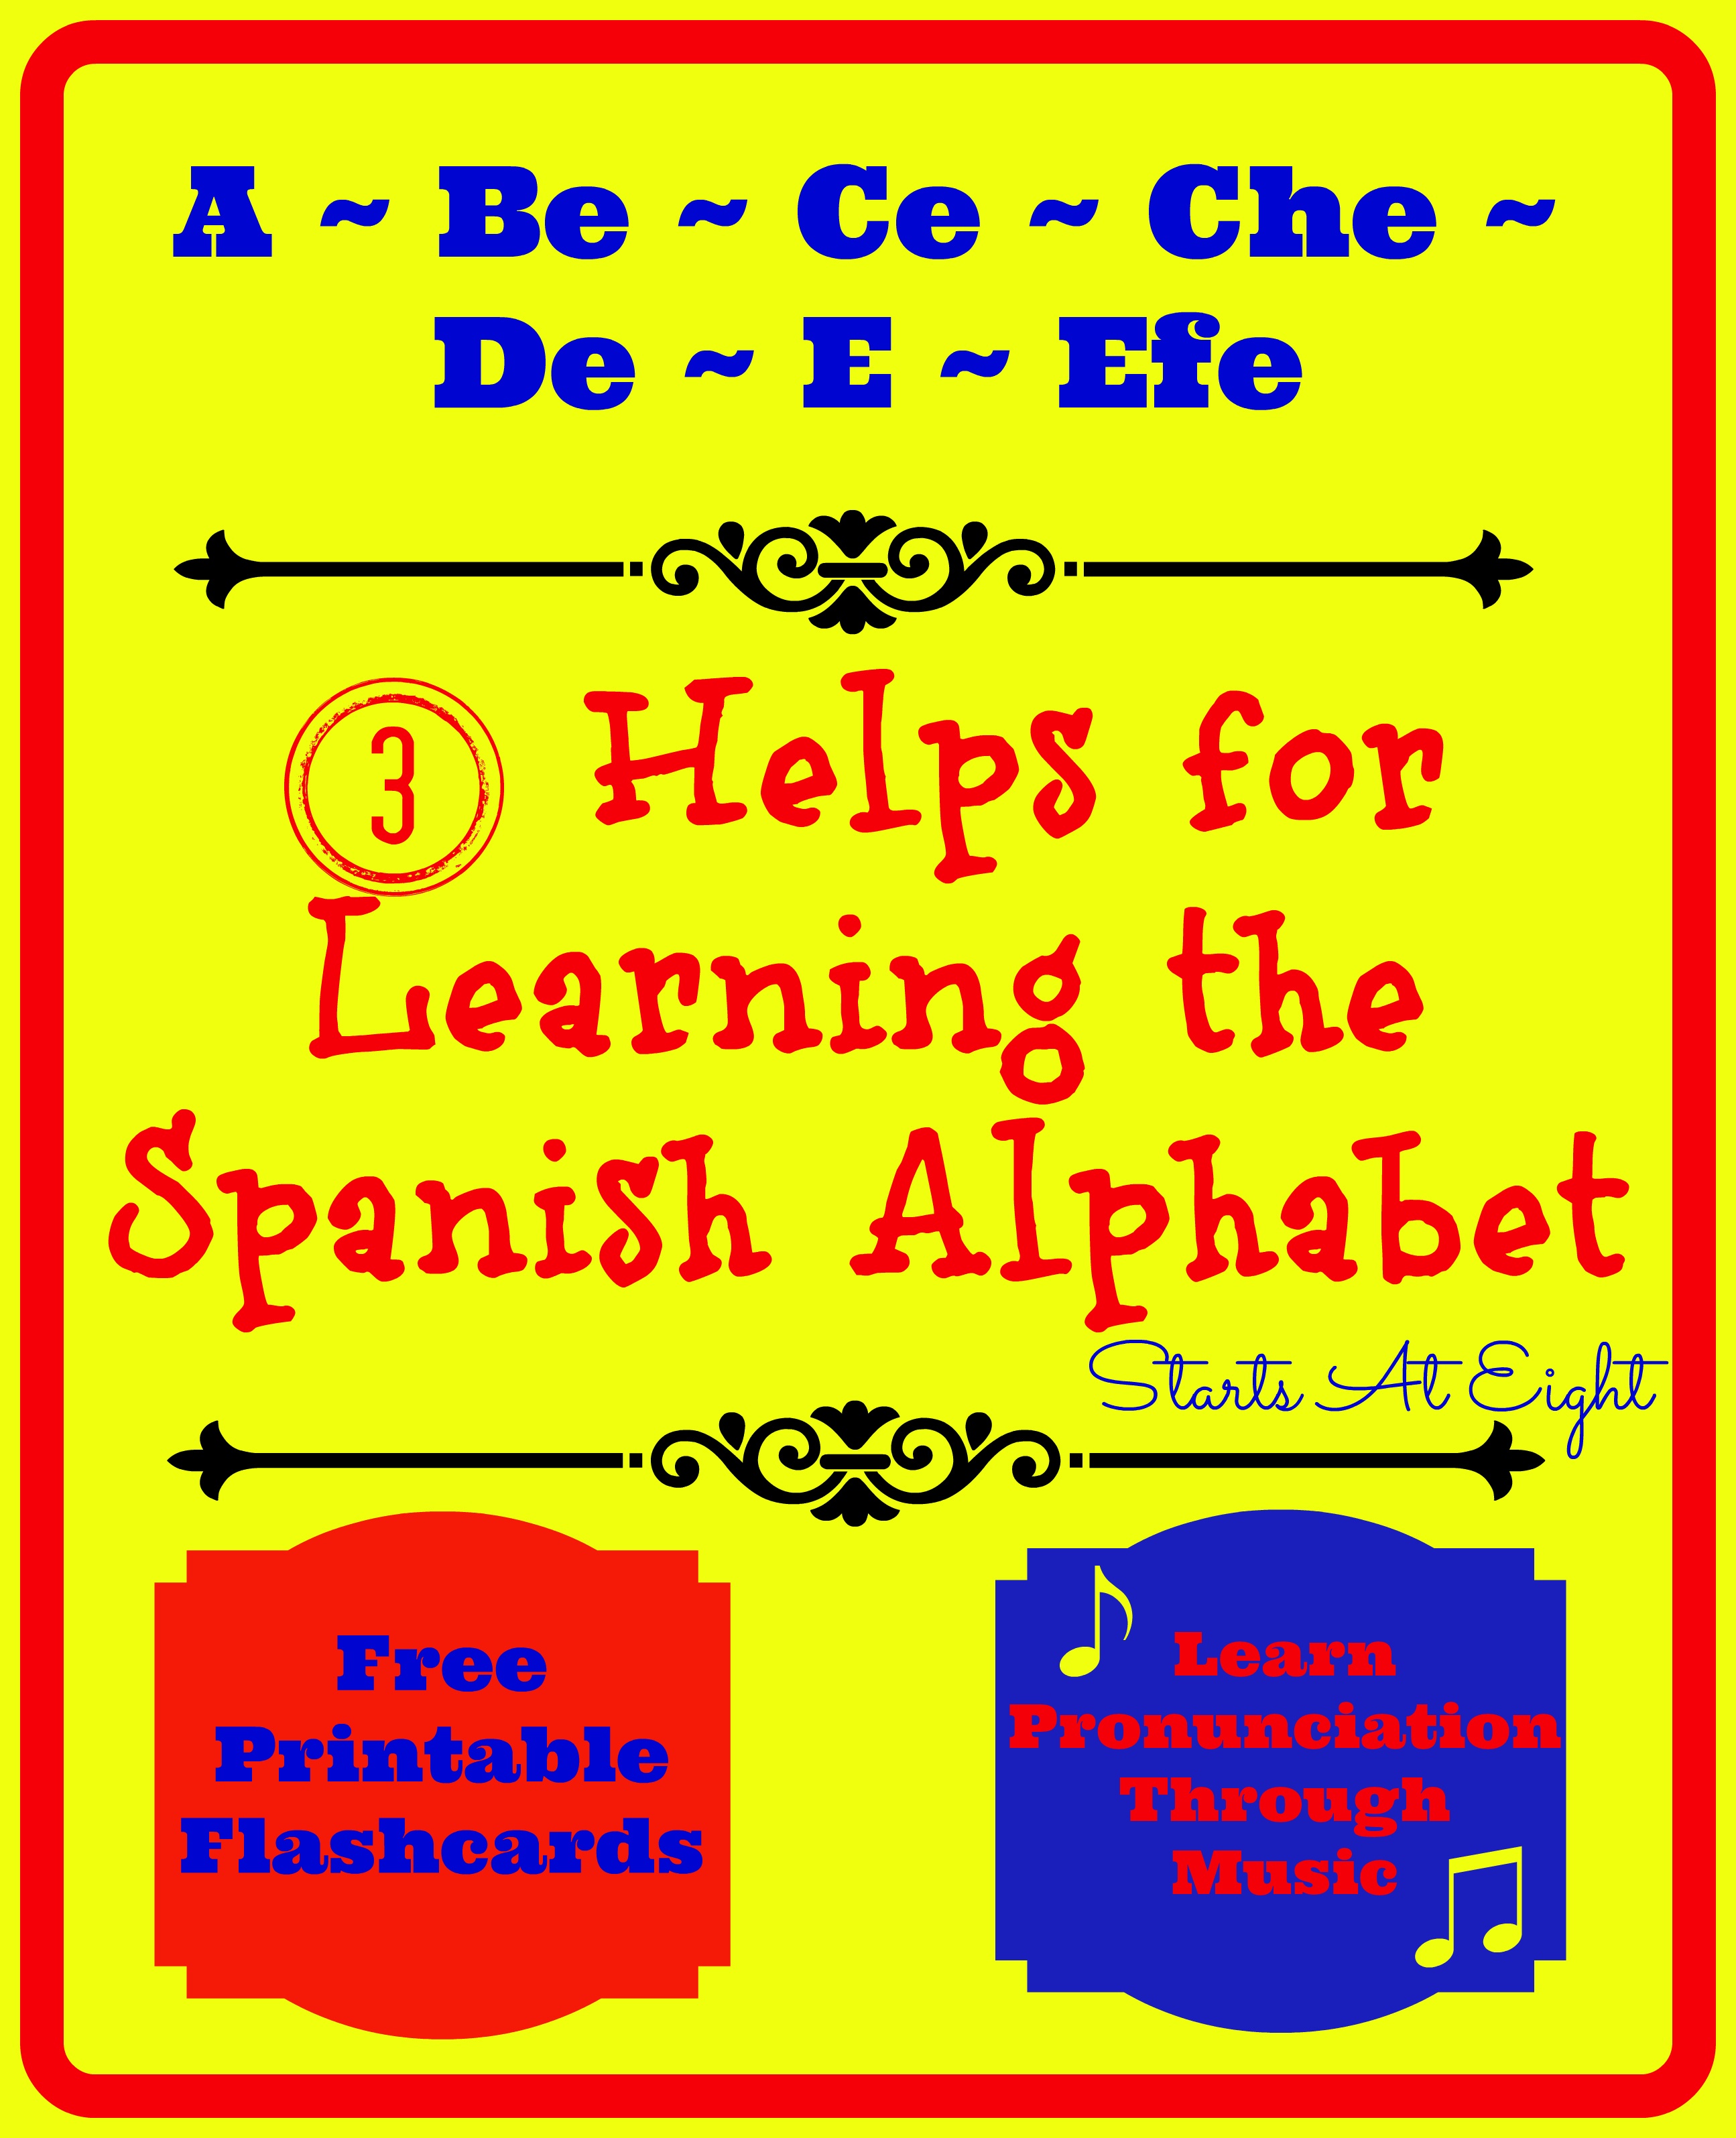 3 Helps For Learning The Spanish Alphabet - Startsateight - Spanish Alphabet Flashcards Free Printable